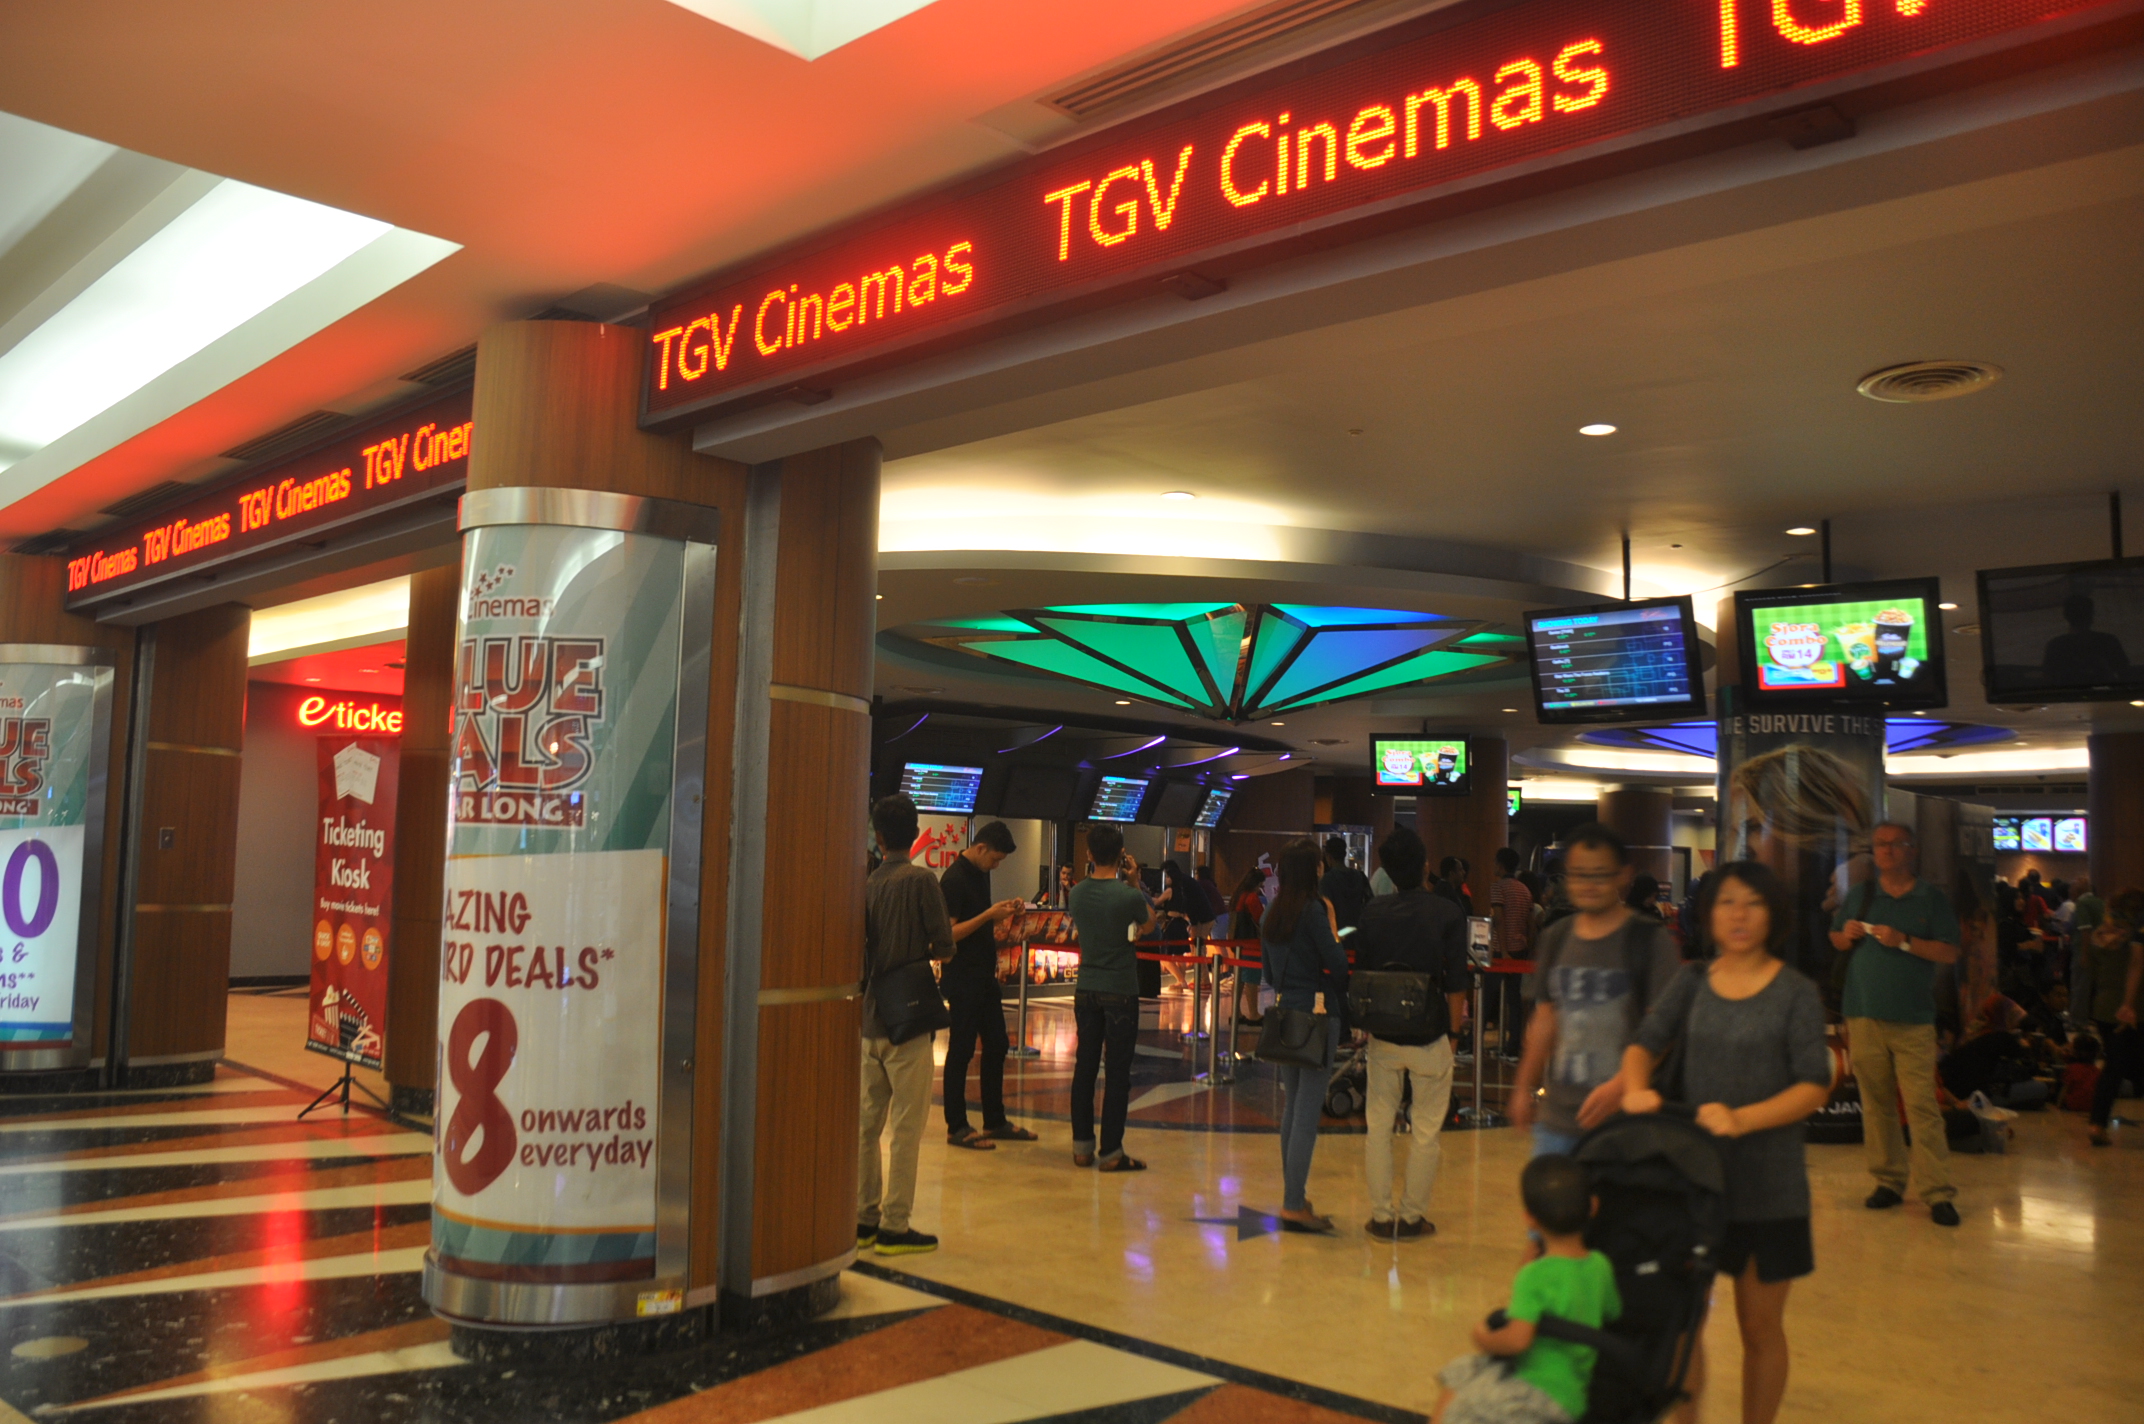 Tgv cinemas @ jaya shopping centre